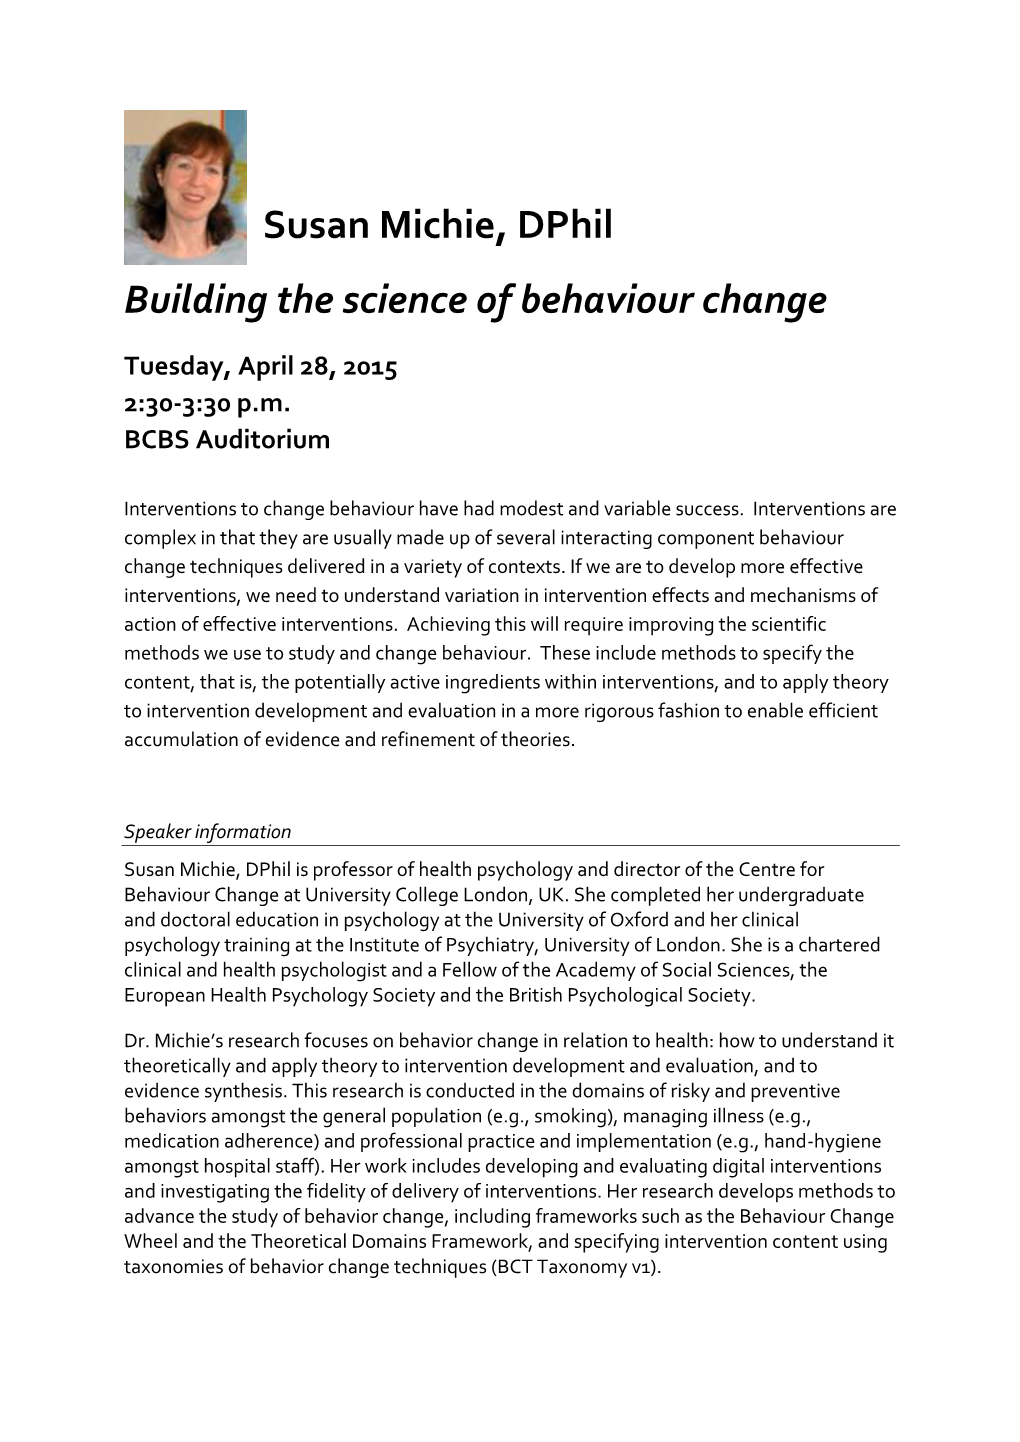 Susan Michie, Dphil Building the Science of Behaviour Change